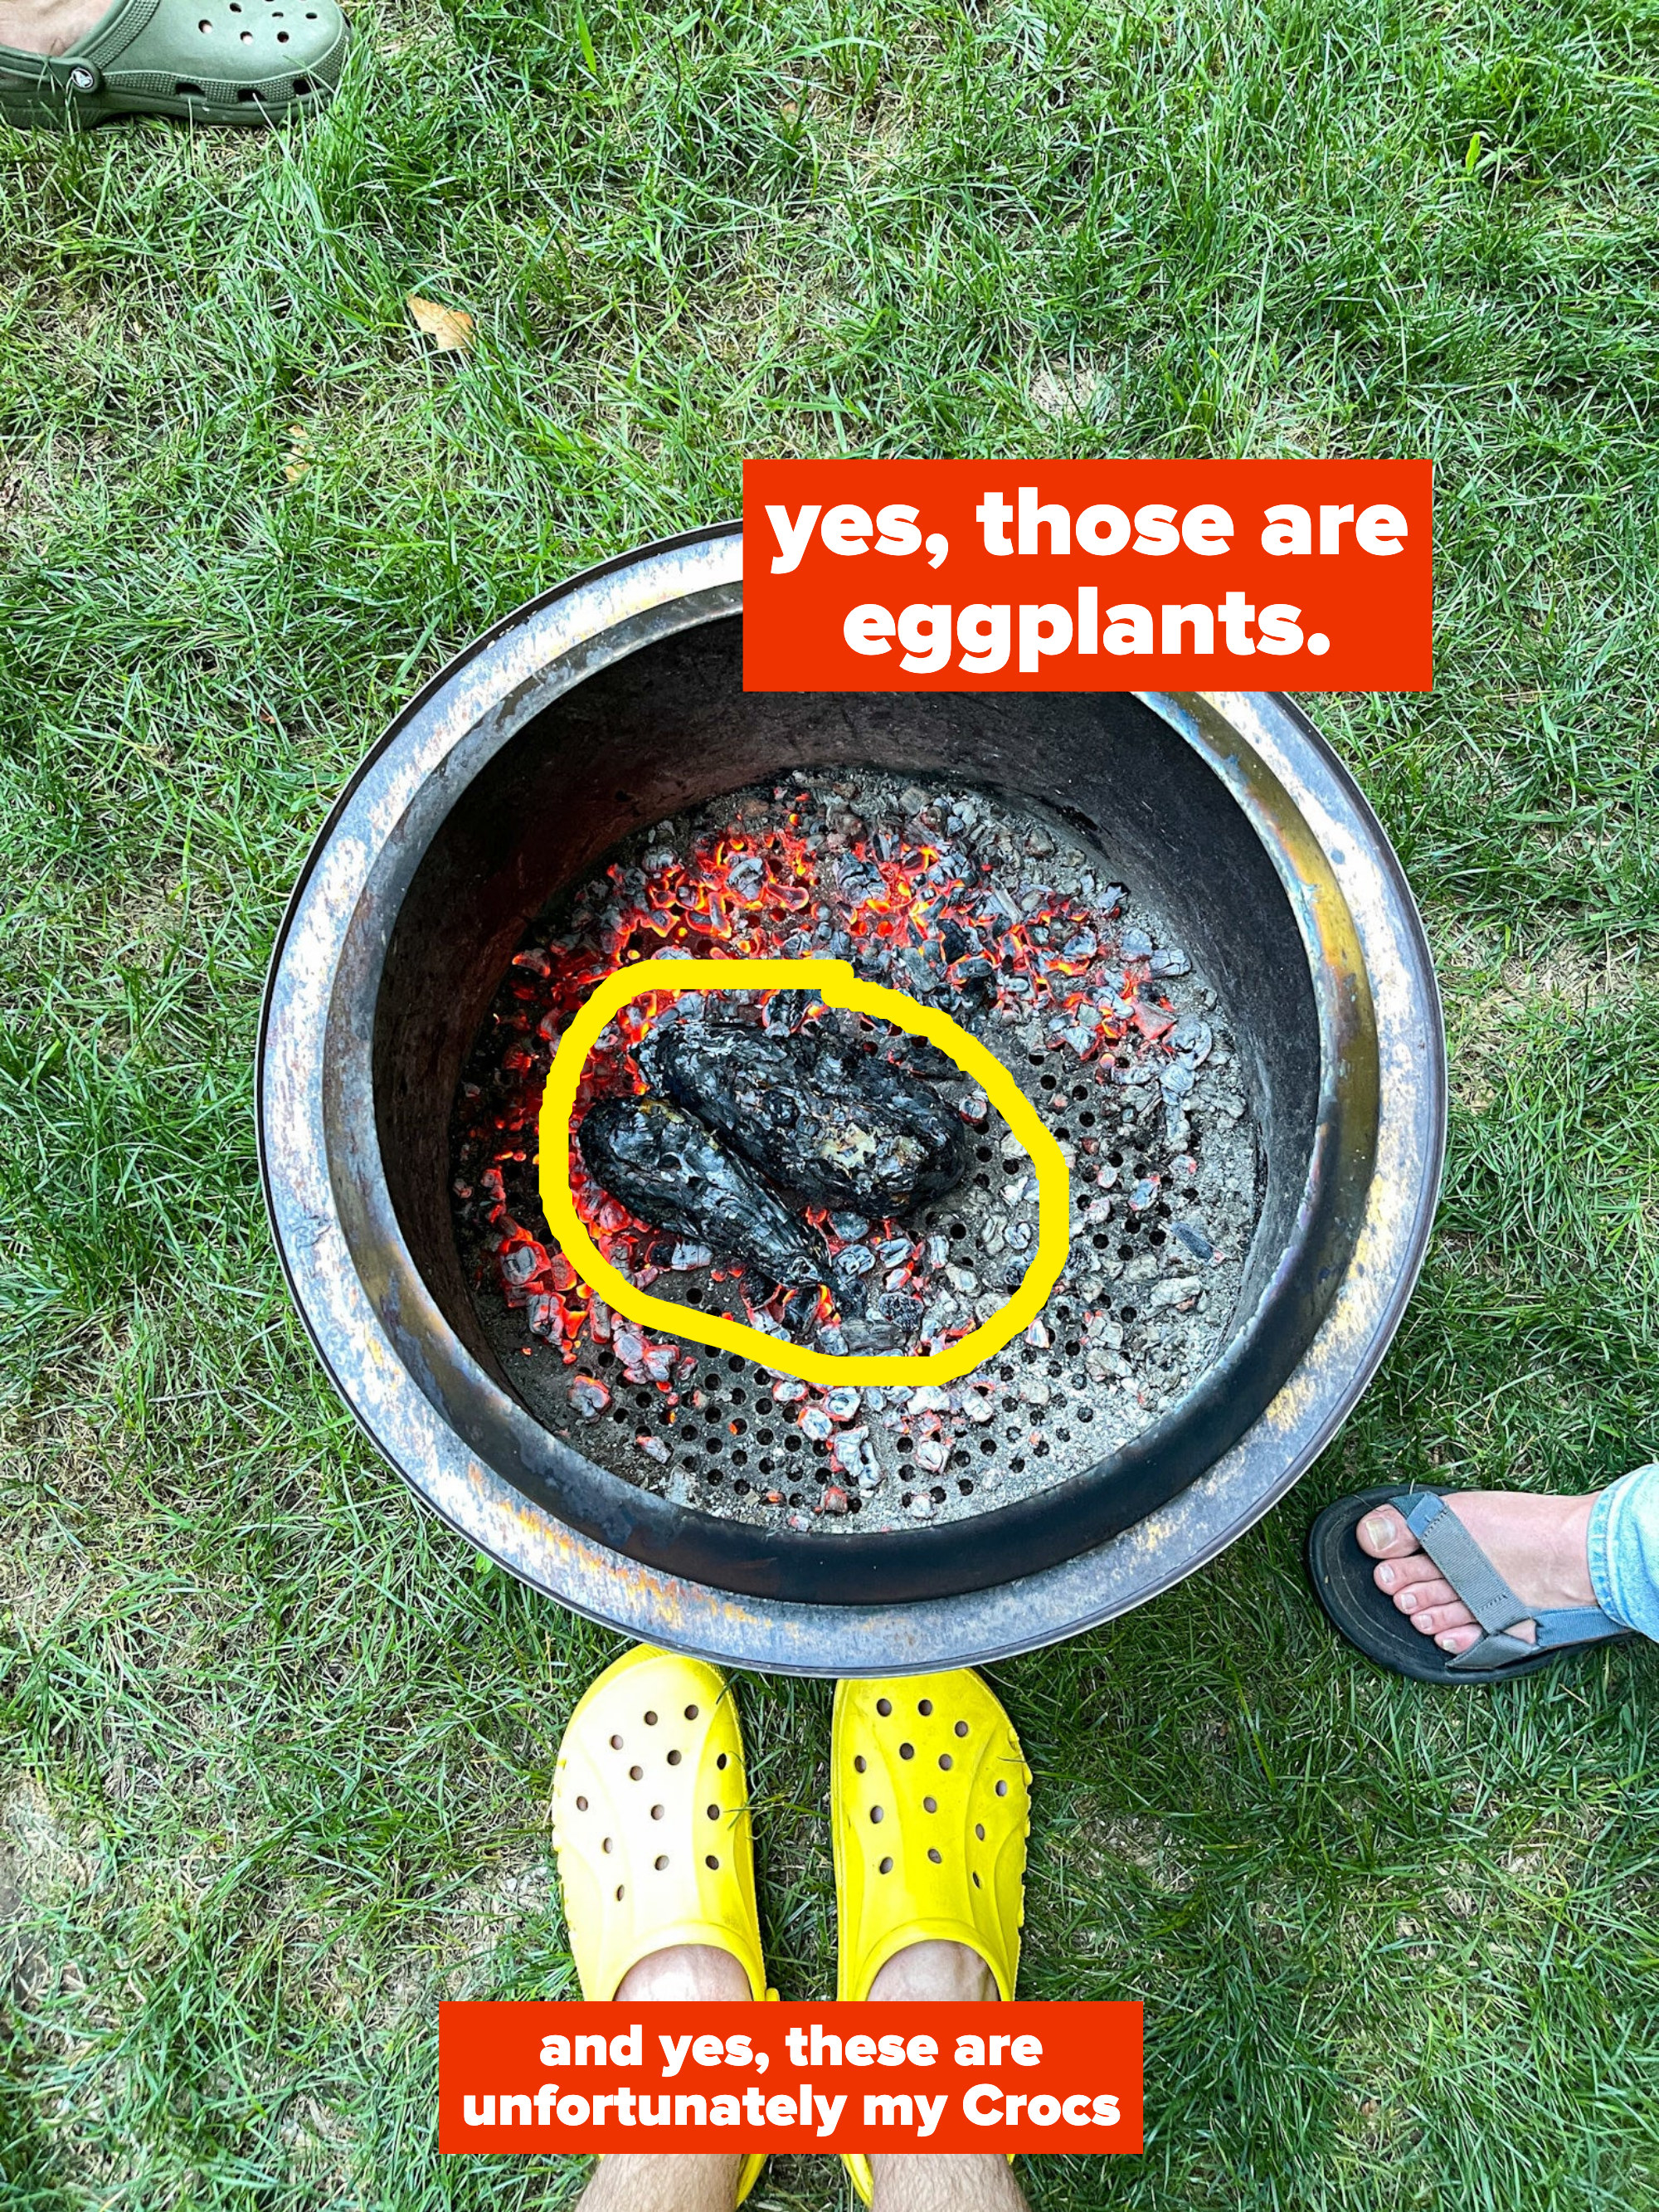 eggplants on coals of a fire pit